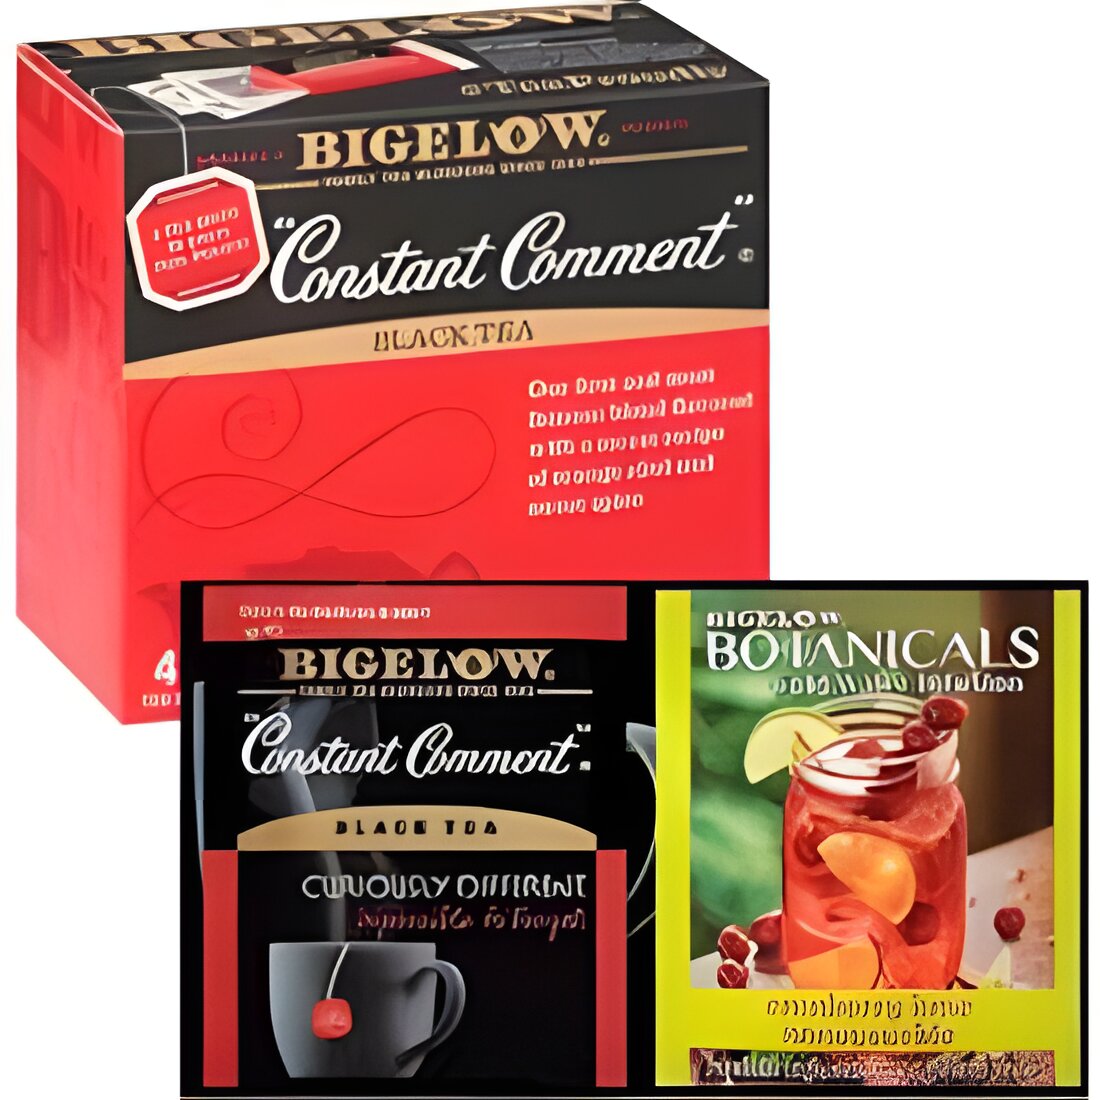 Free Bigelow “Constant Comment” Tea